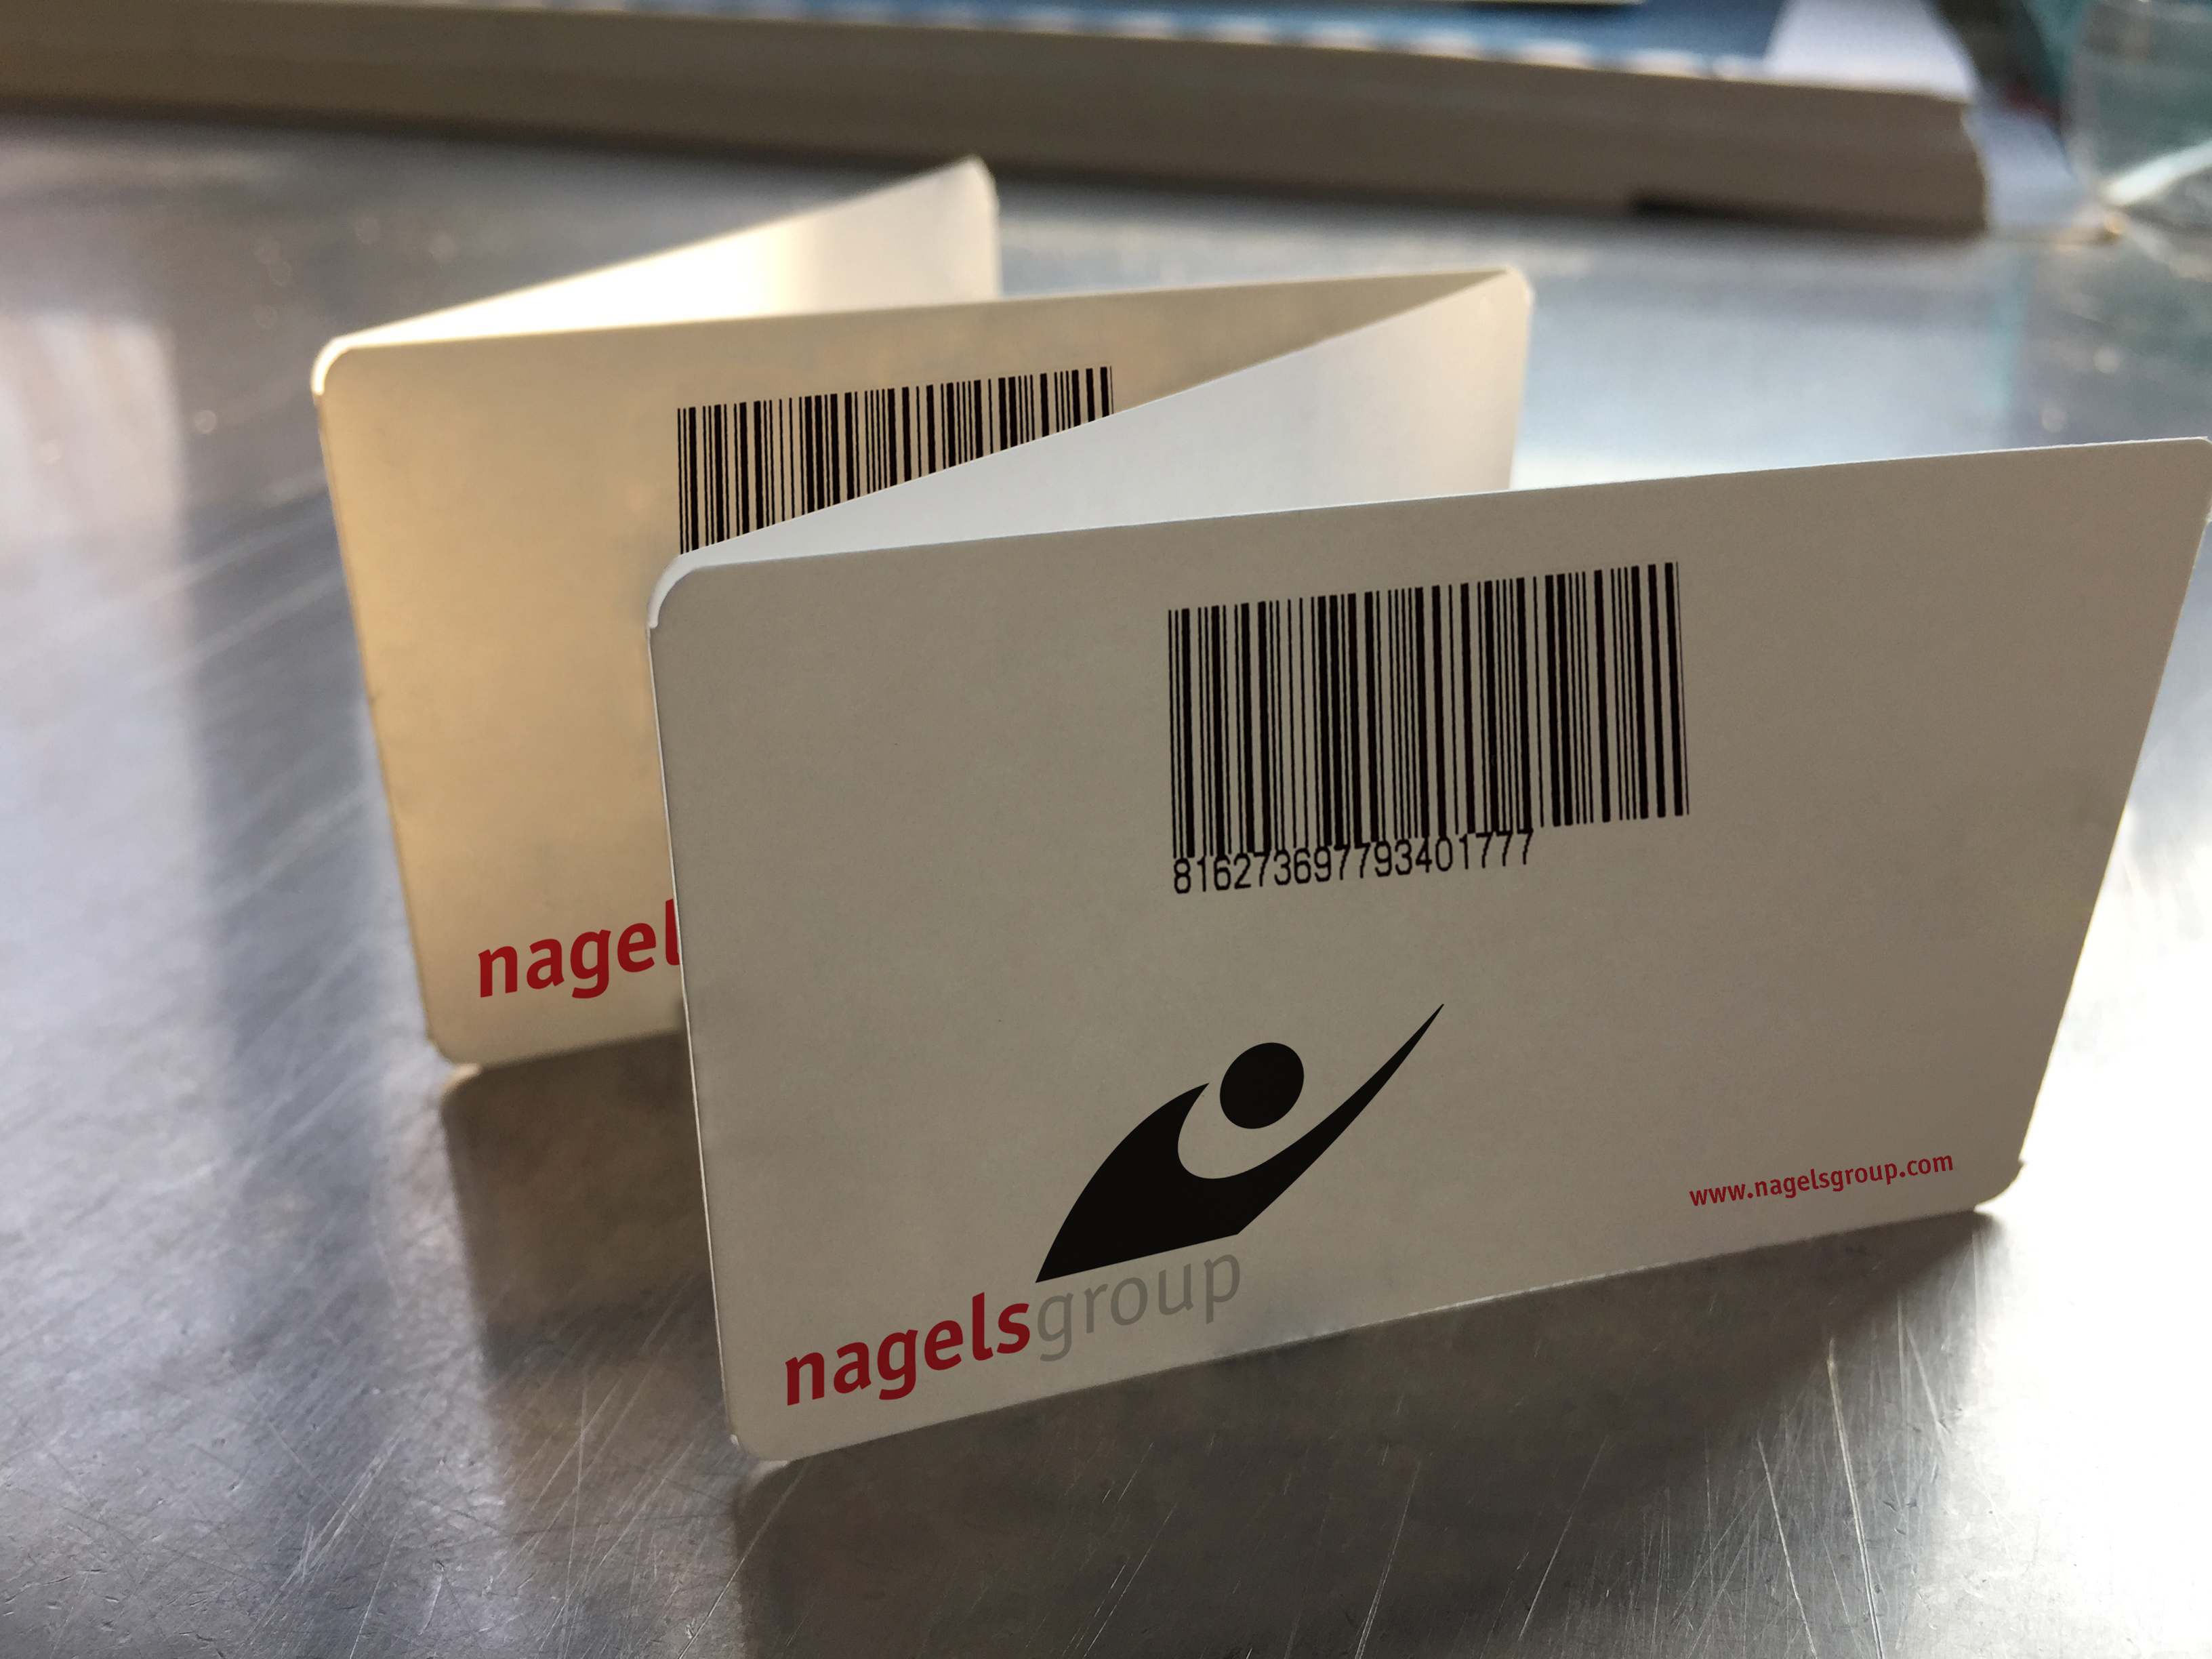 Nagels tickets